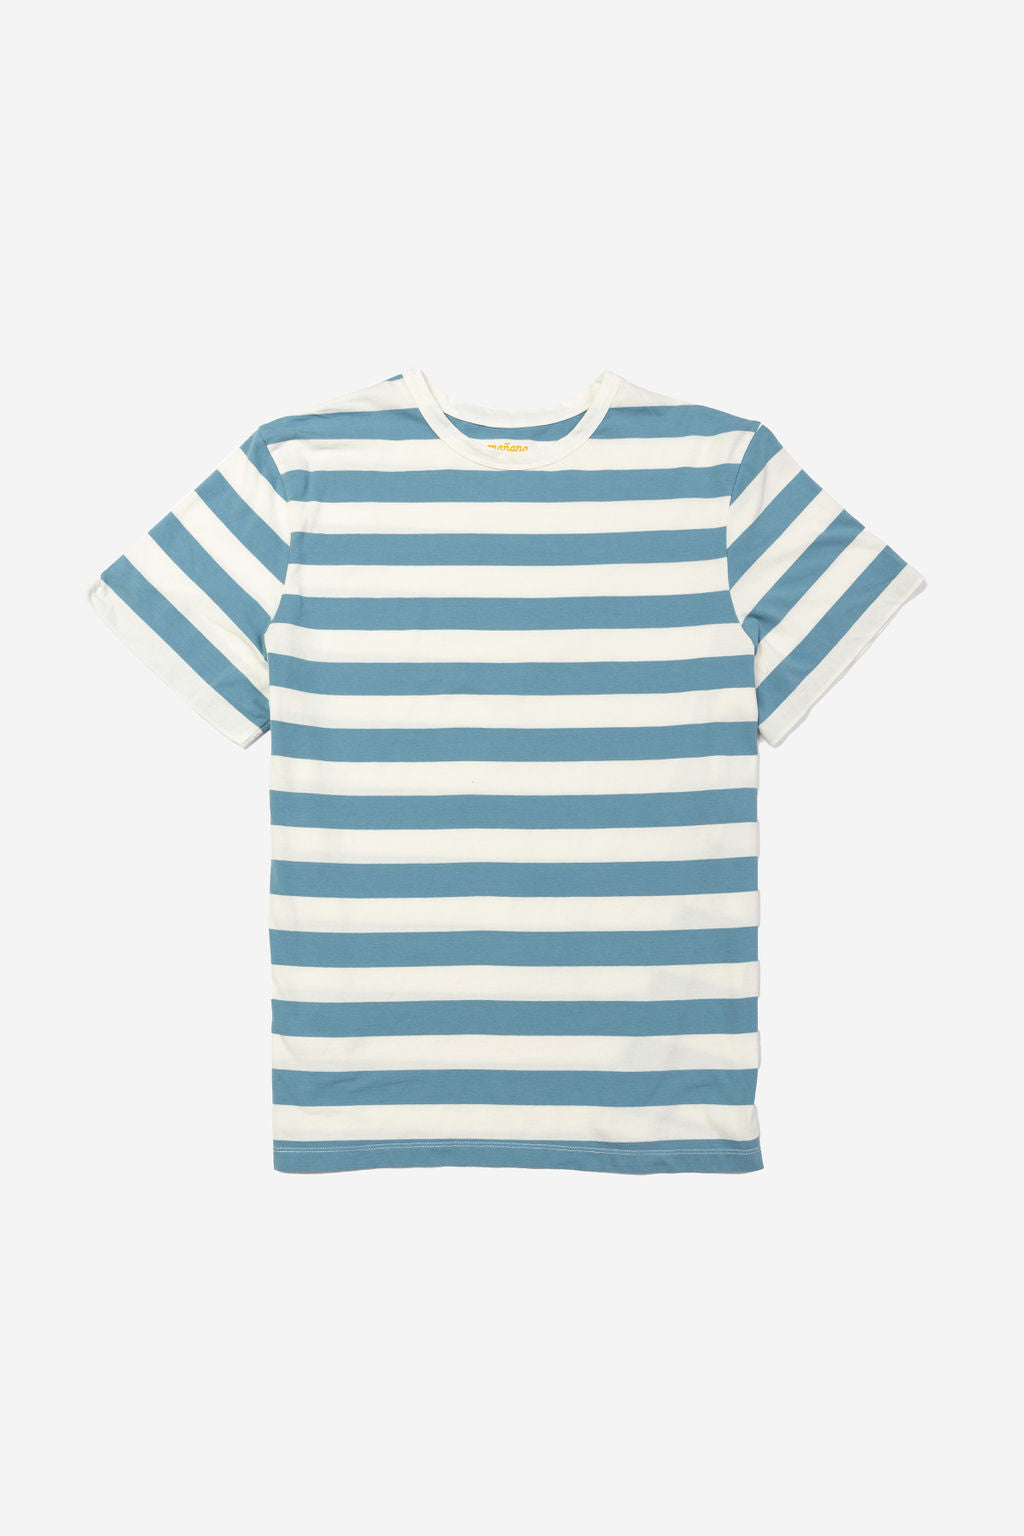 a light blue/white tee shirt with big stripes